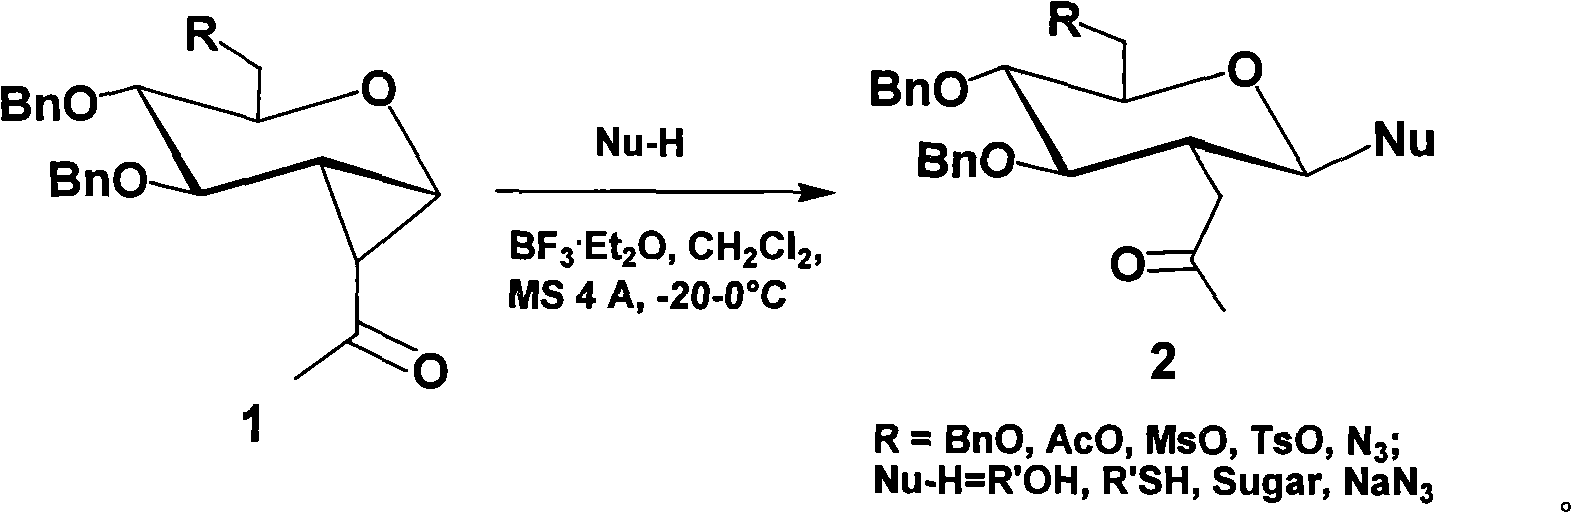 Preparation method of 2-C-acetonyl-2-deoxy-glucoside compounds